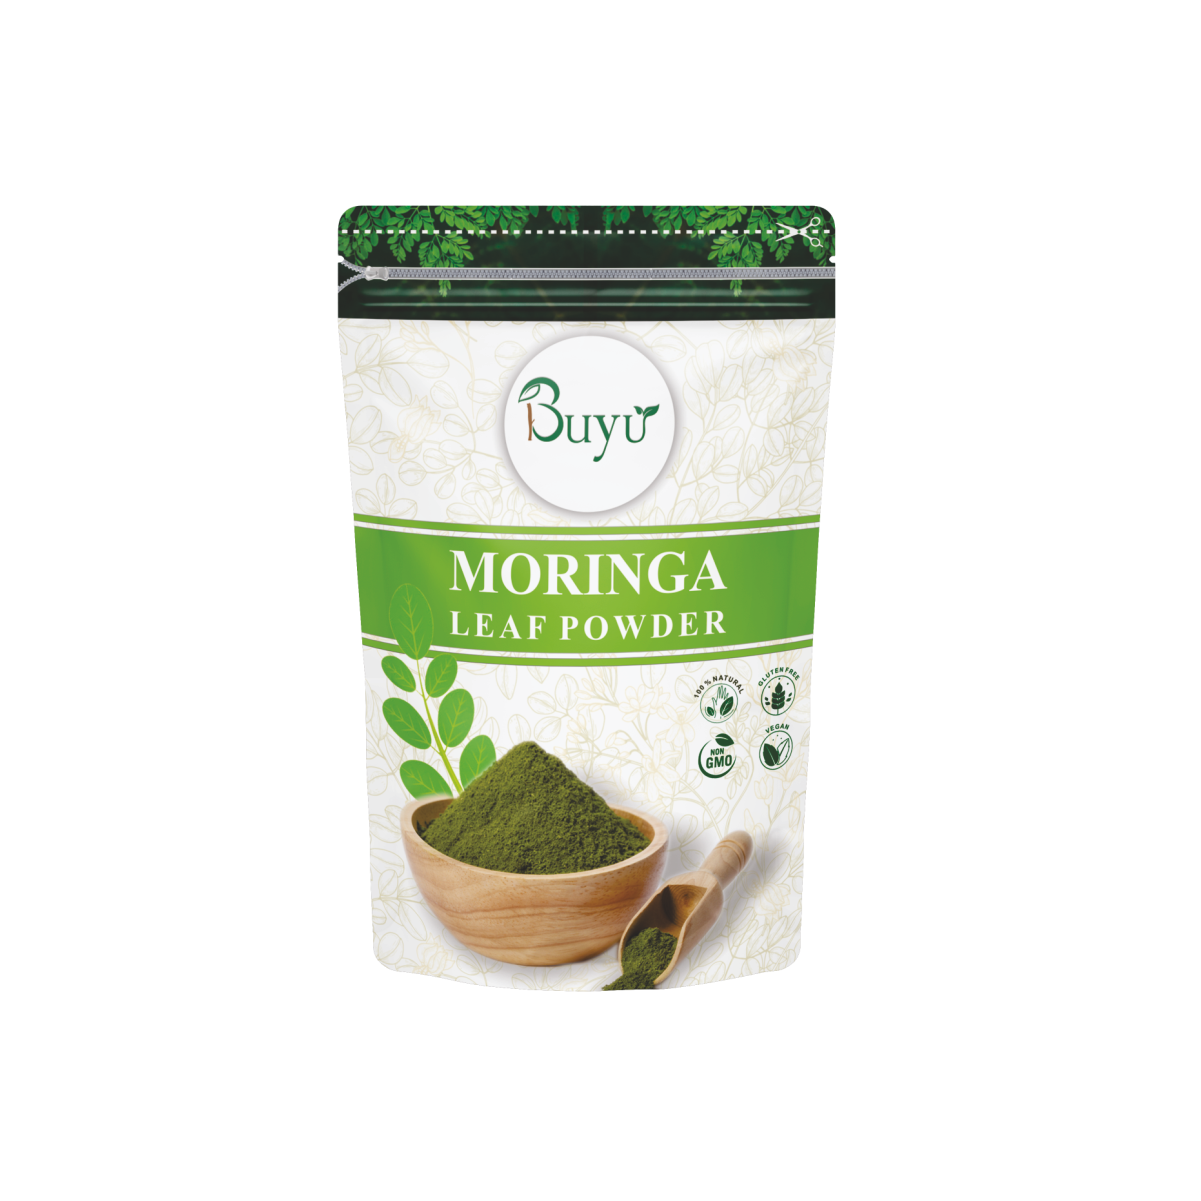 Moringa Leaf Powder 100g - BUYU